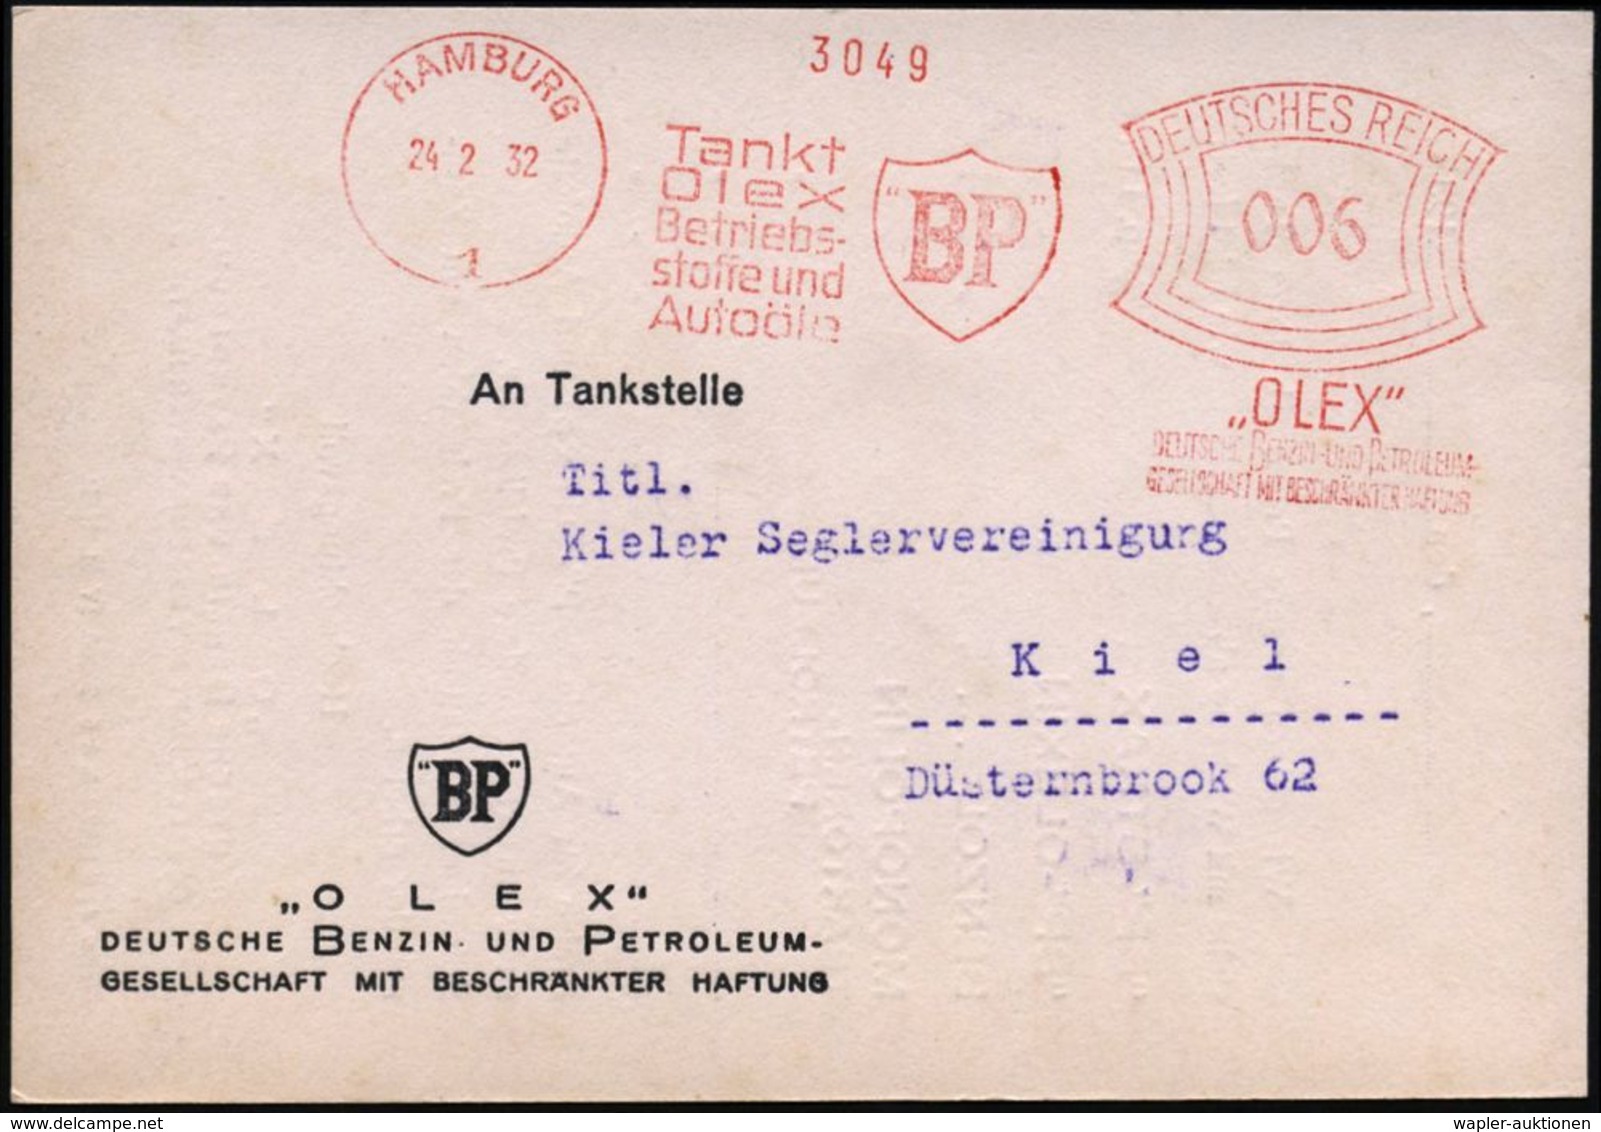 MINERALÖL & KRAFTSTOFFE / TECHNISCHE ÖLE : HAMBURG/ 1/ Tankt/ Olex/ Betriebs-/ Stoffe../ "BP".."OLEX" 1932 (24.2.) AFS = - Chimie